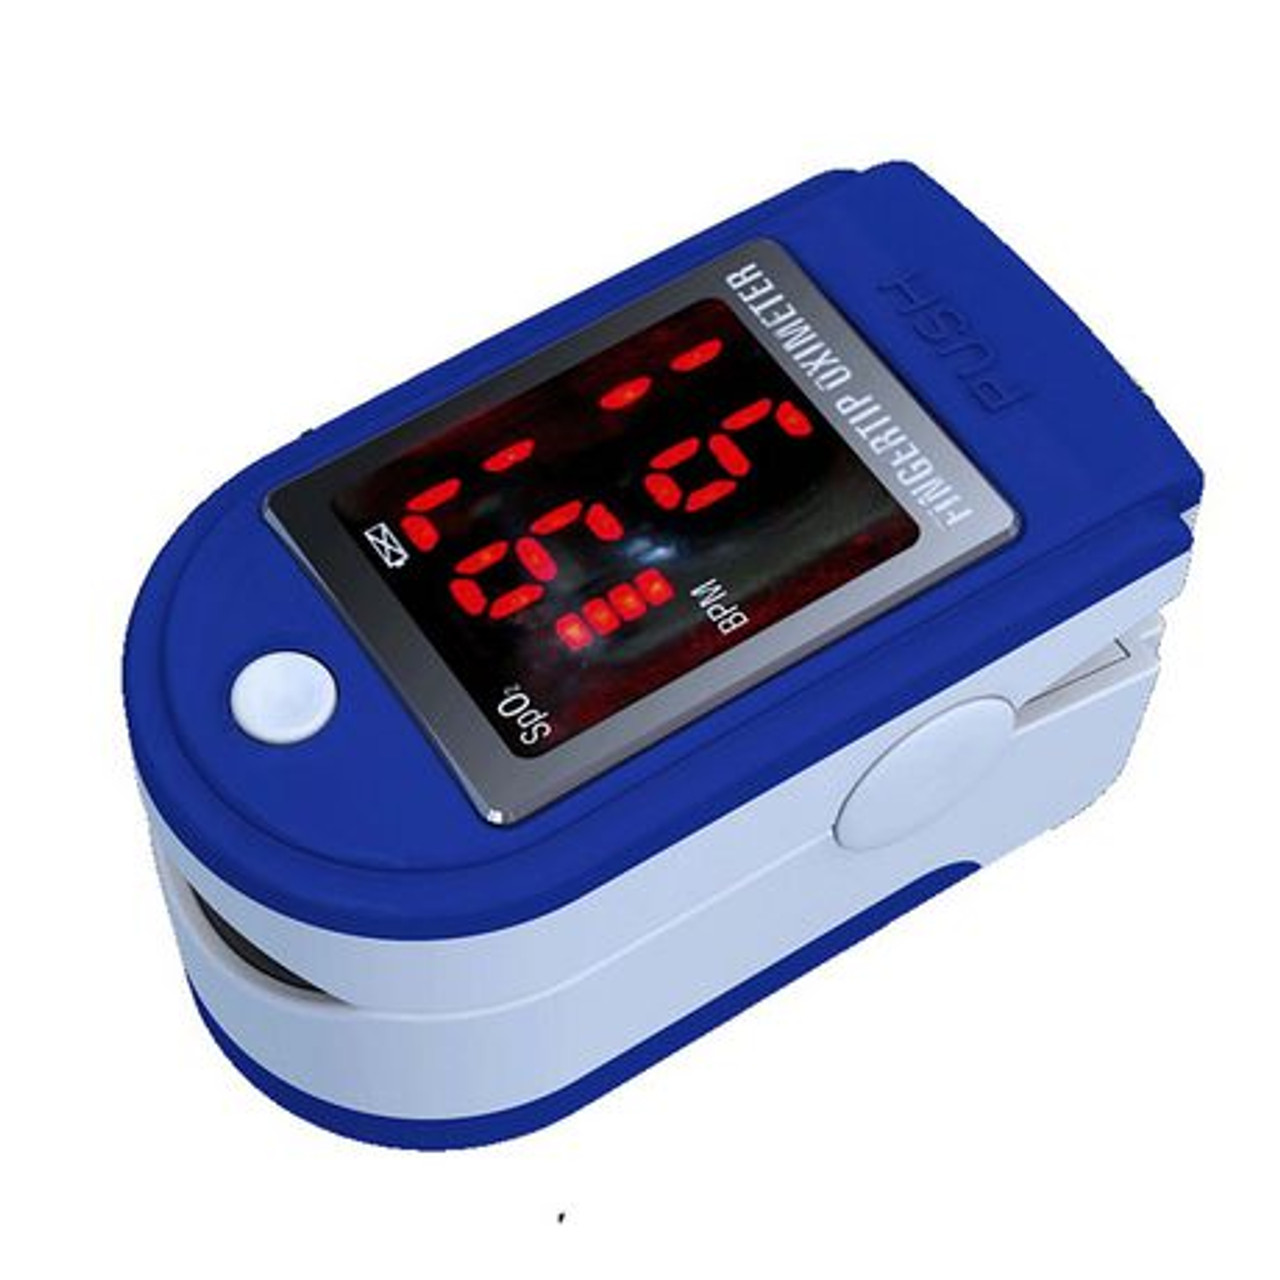 ToronTek H50 pulse oximeter- measuring SPO2 and pulse rate